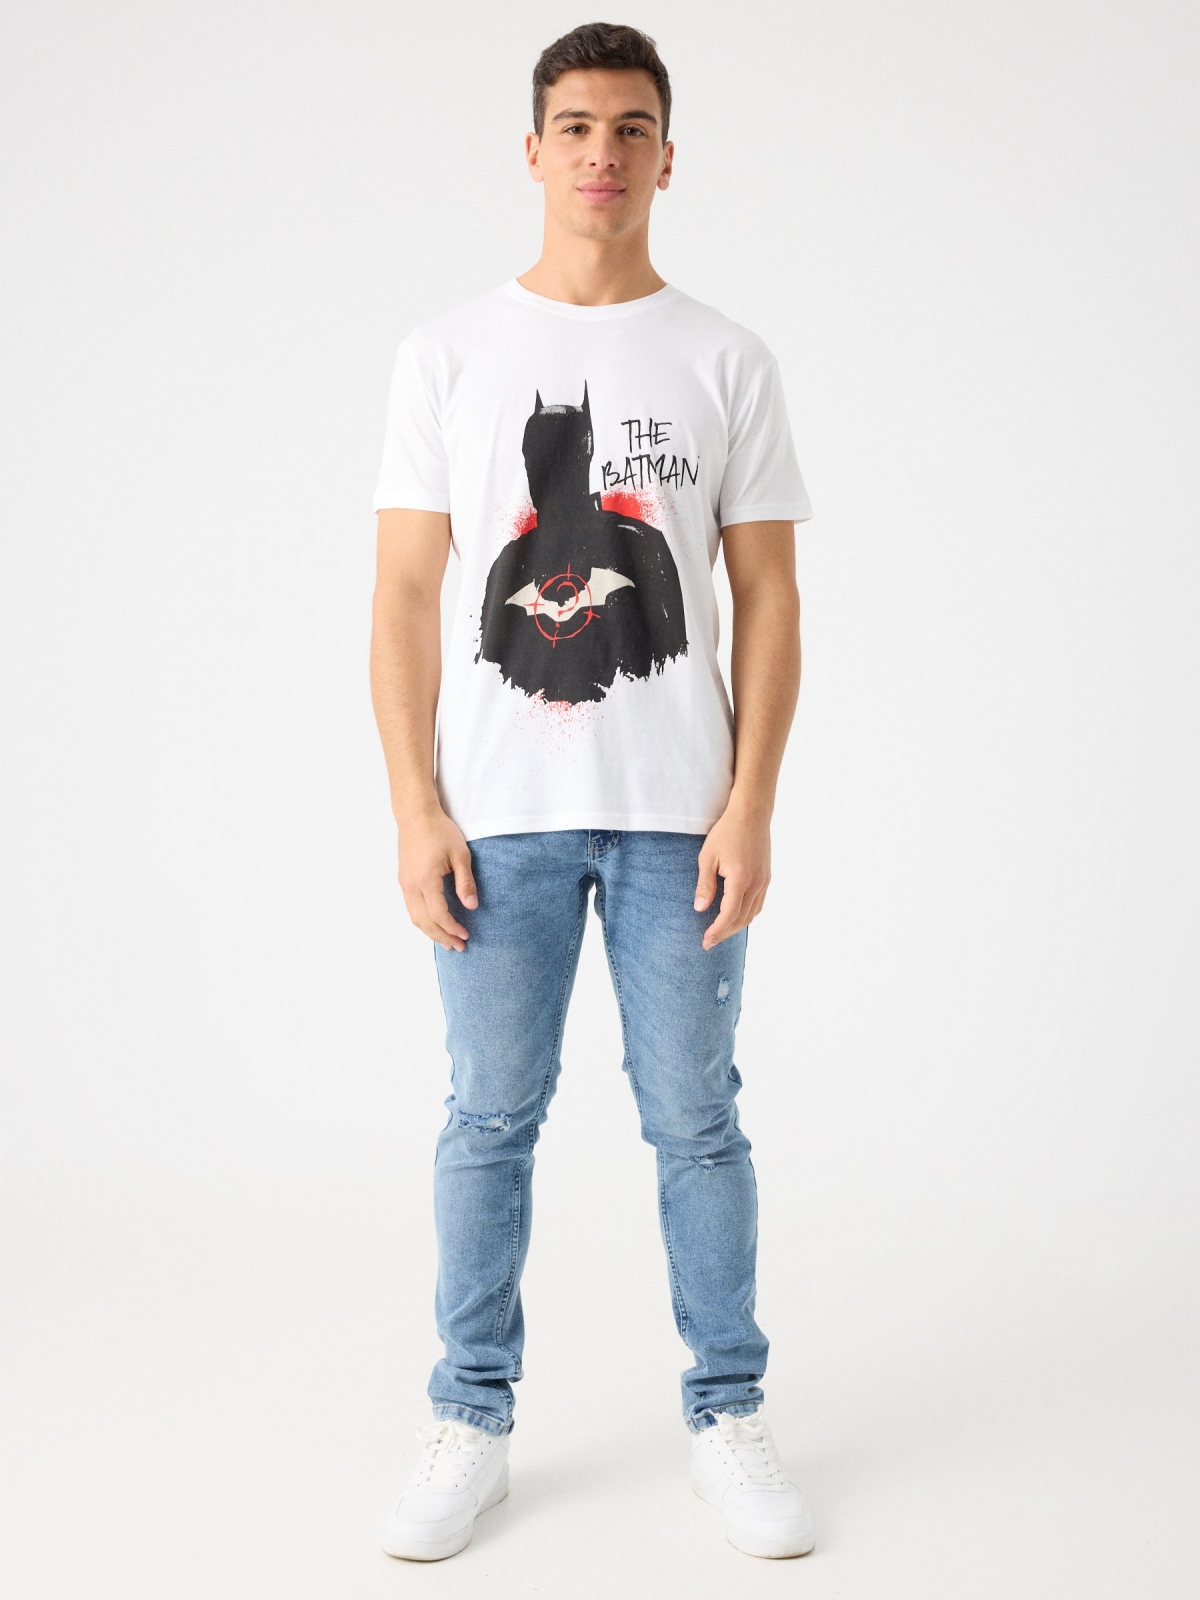 T-shirt do Batman branco vista geral frontal